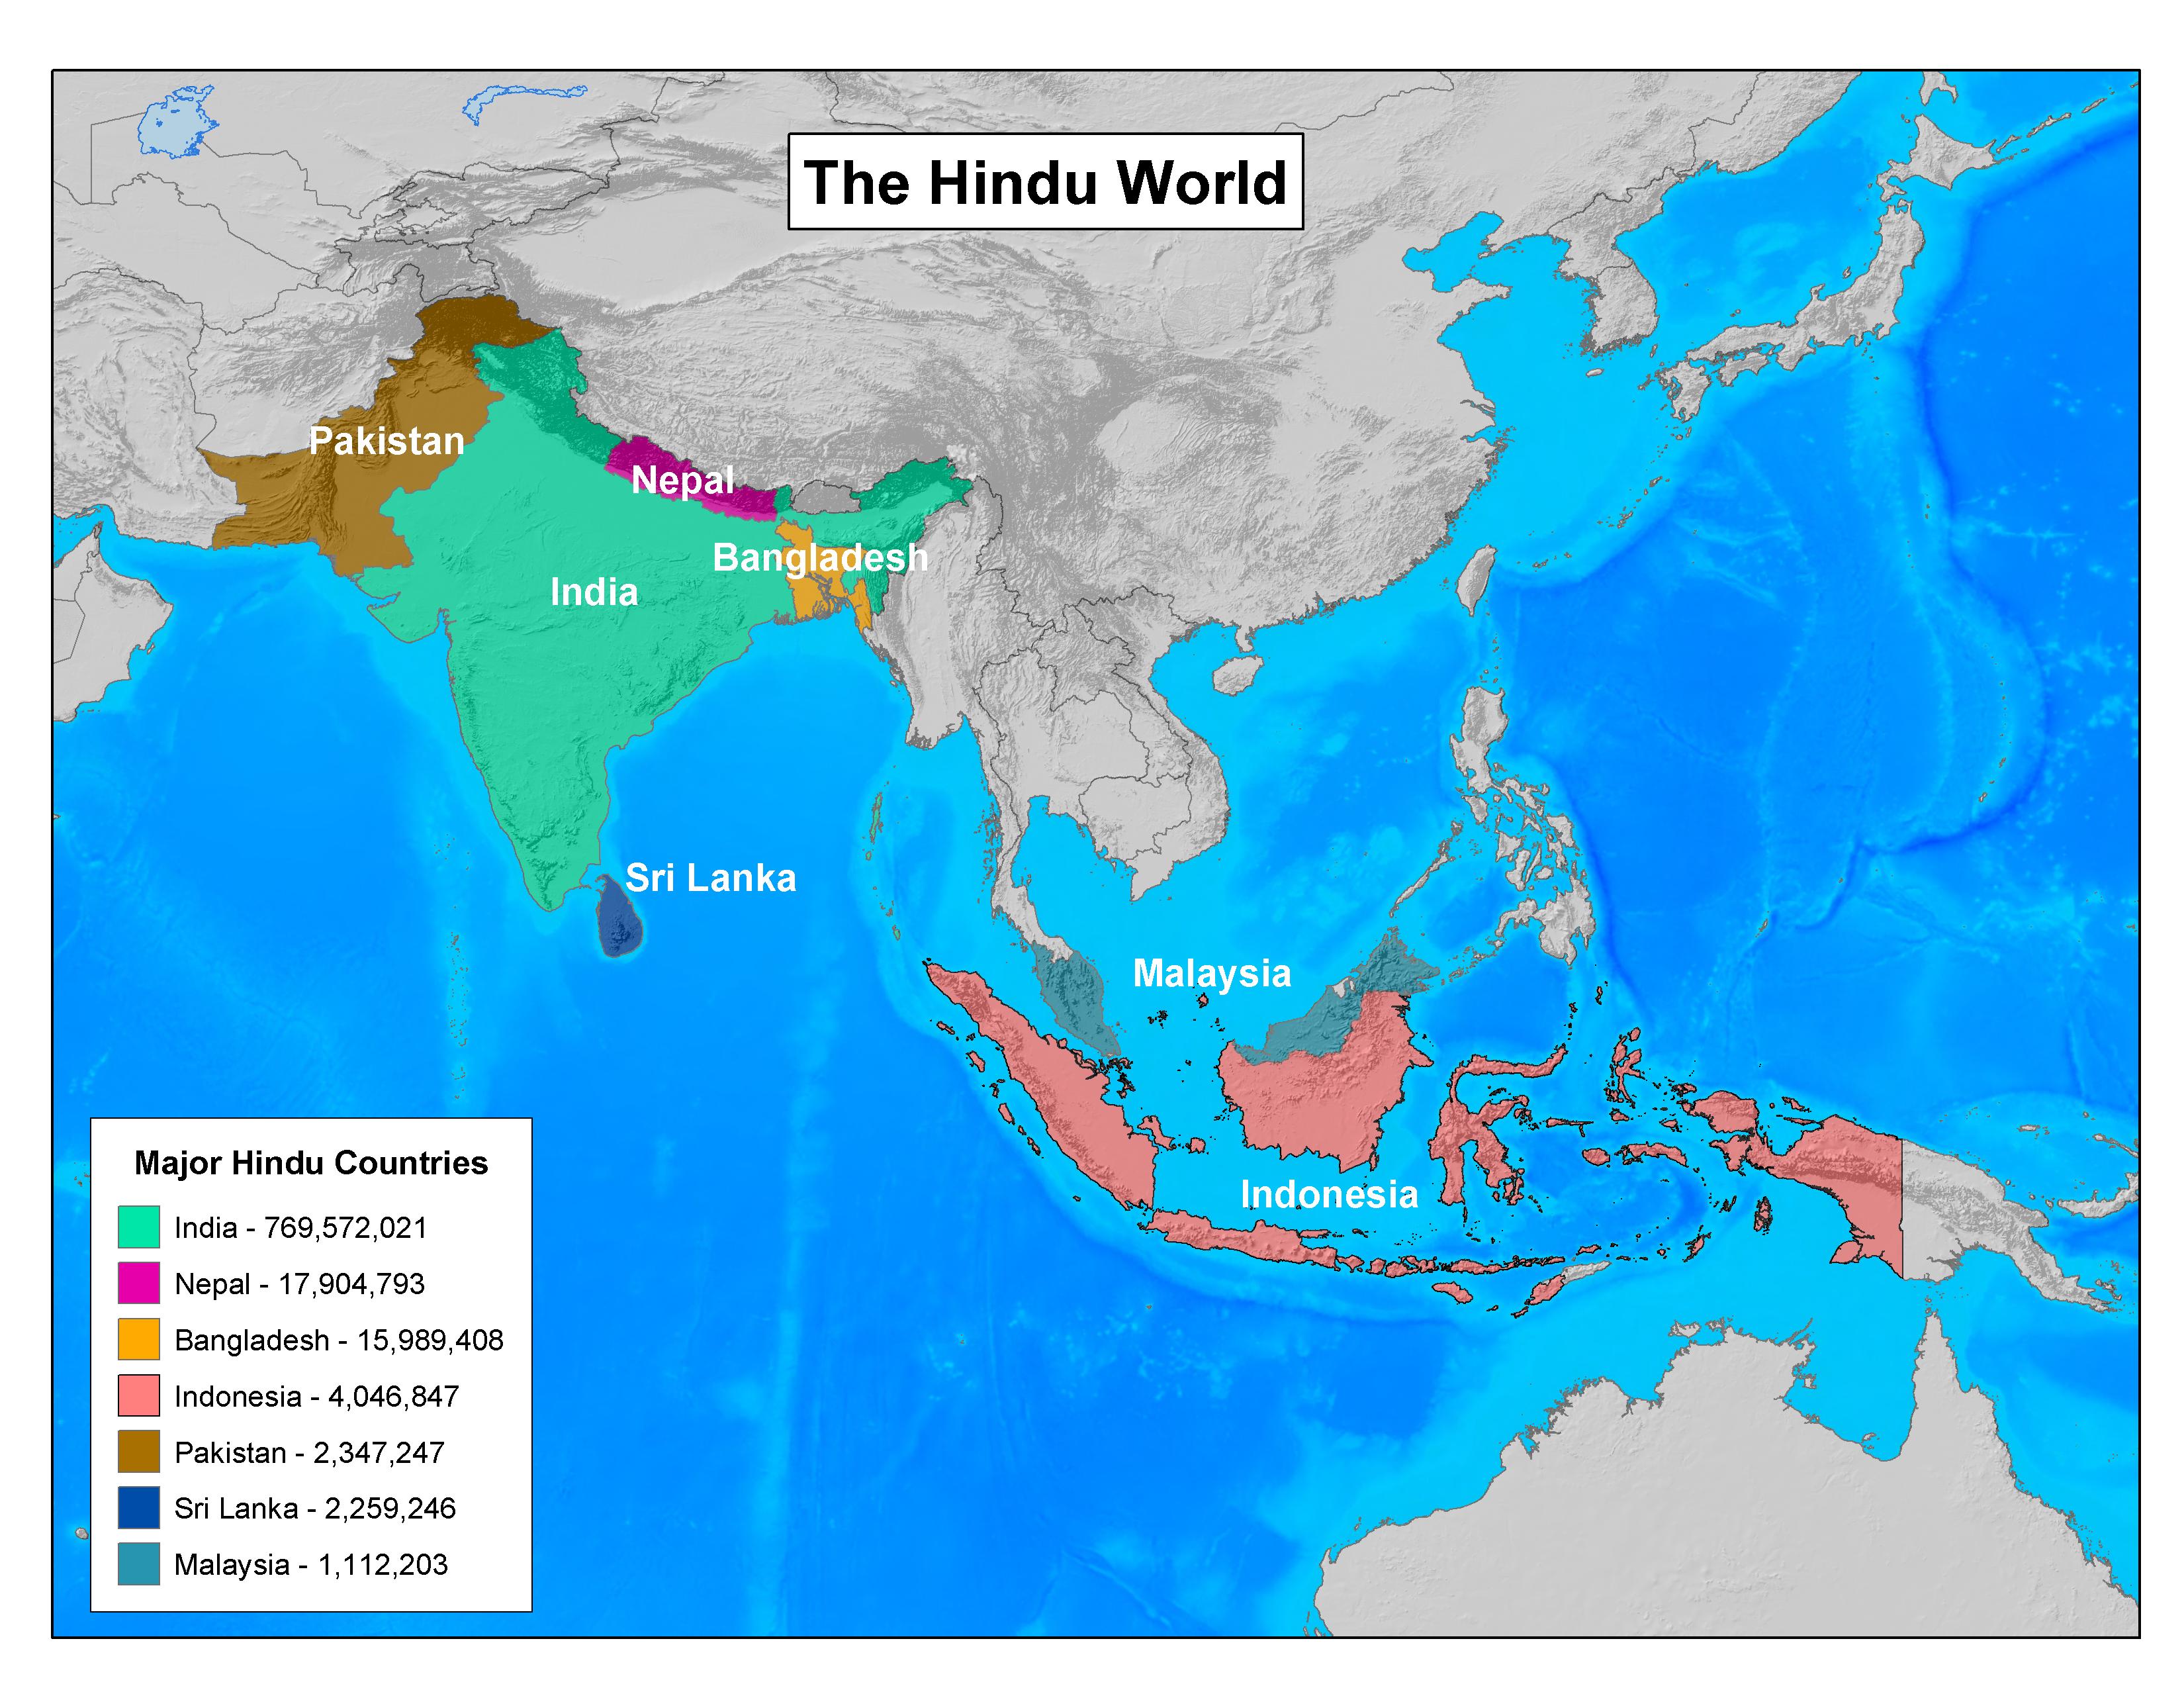 The Hindu world